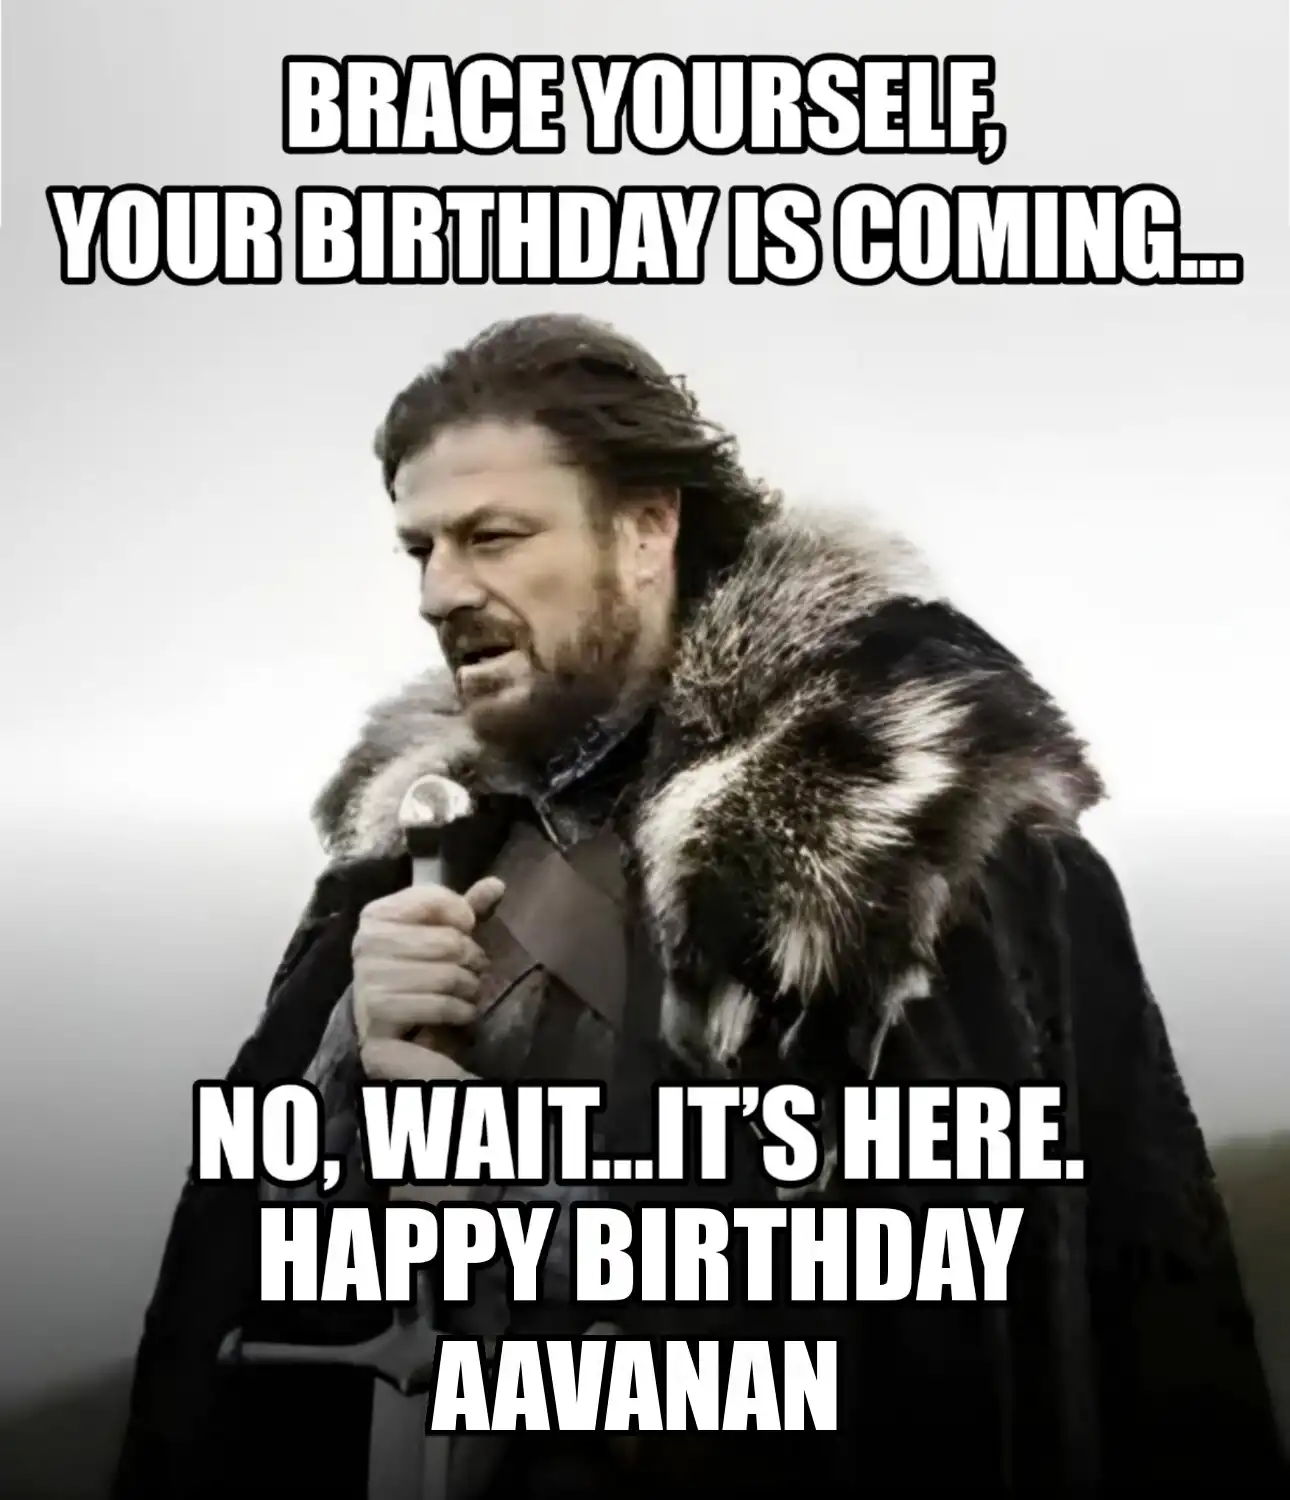 Happy Birthday Aavanan Brace Yourself Your Birthday Is Coming Meme